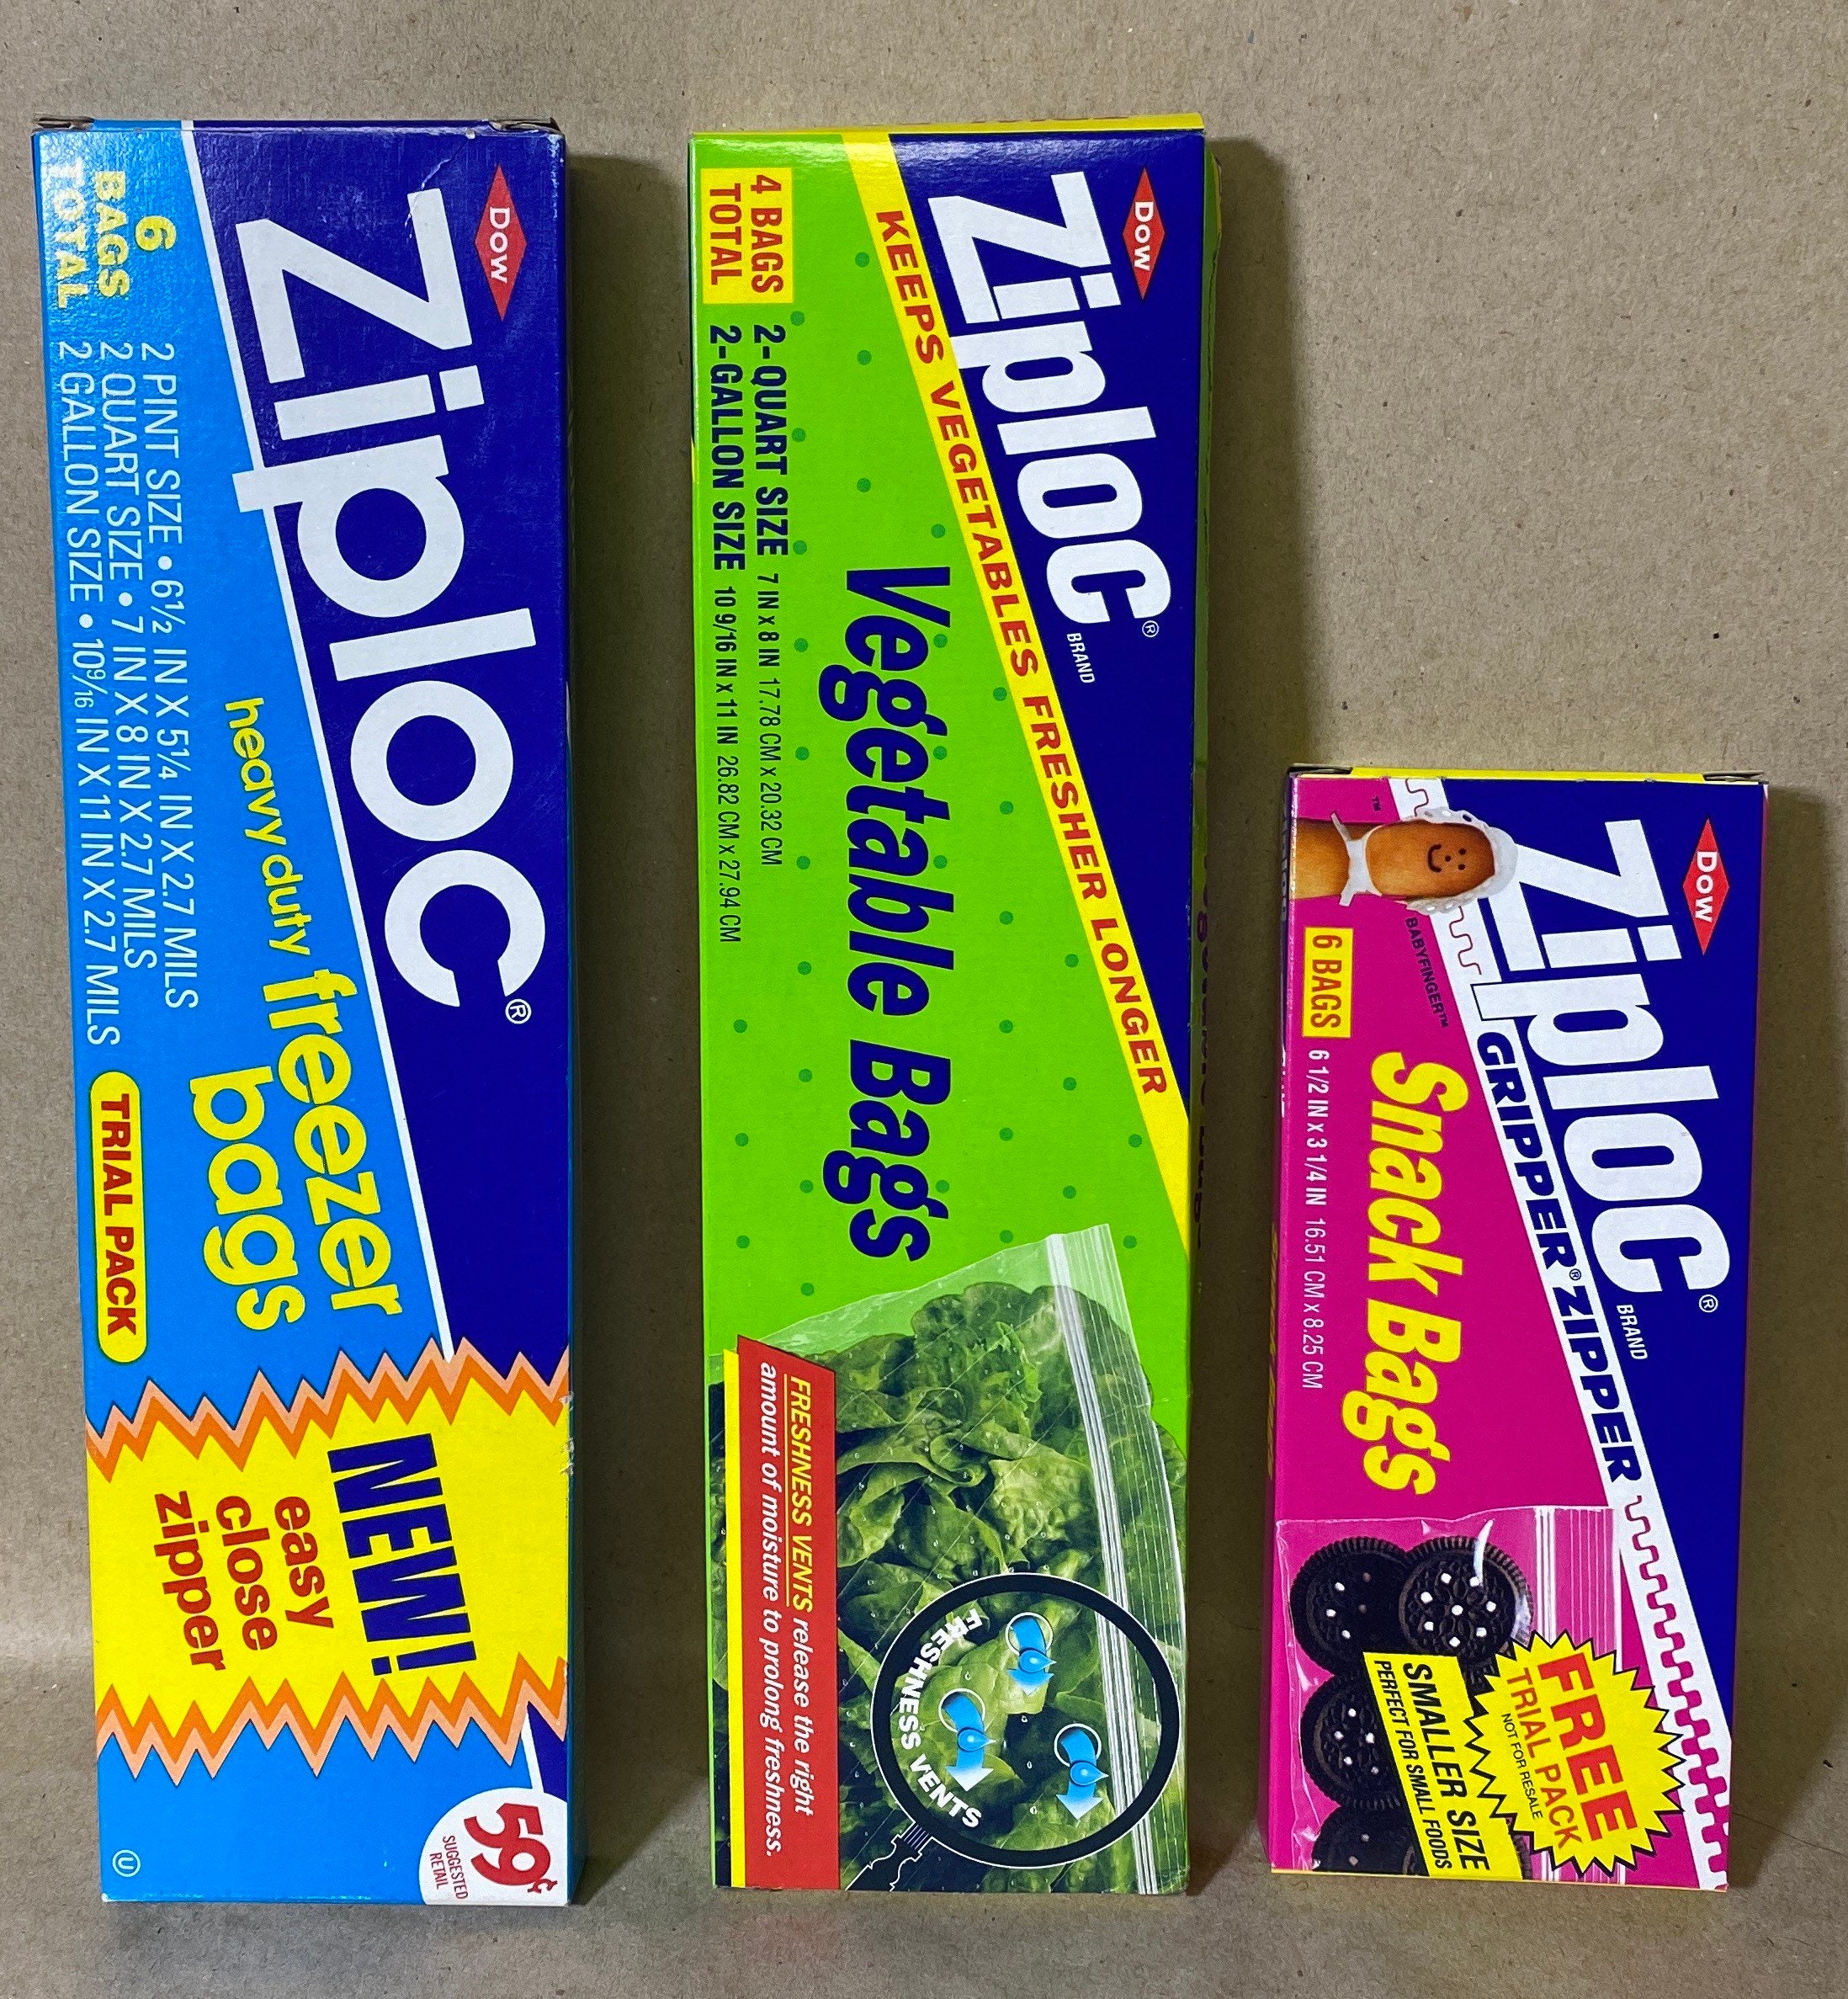 Vintage 1980's 1990's Glad-Lock Zipper Snack Bags Food Zip Box T.V. Movie  Prop